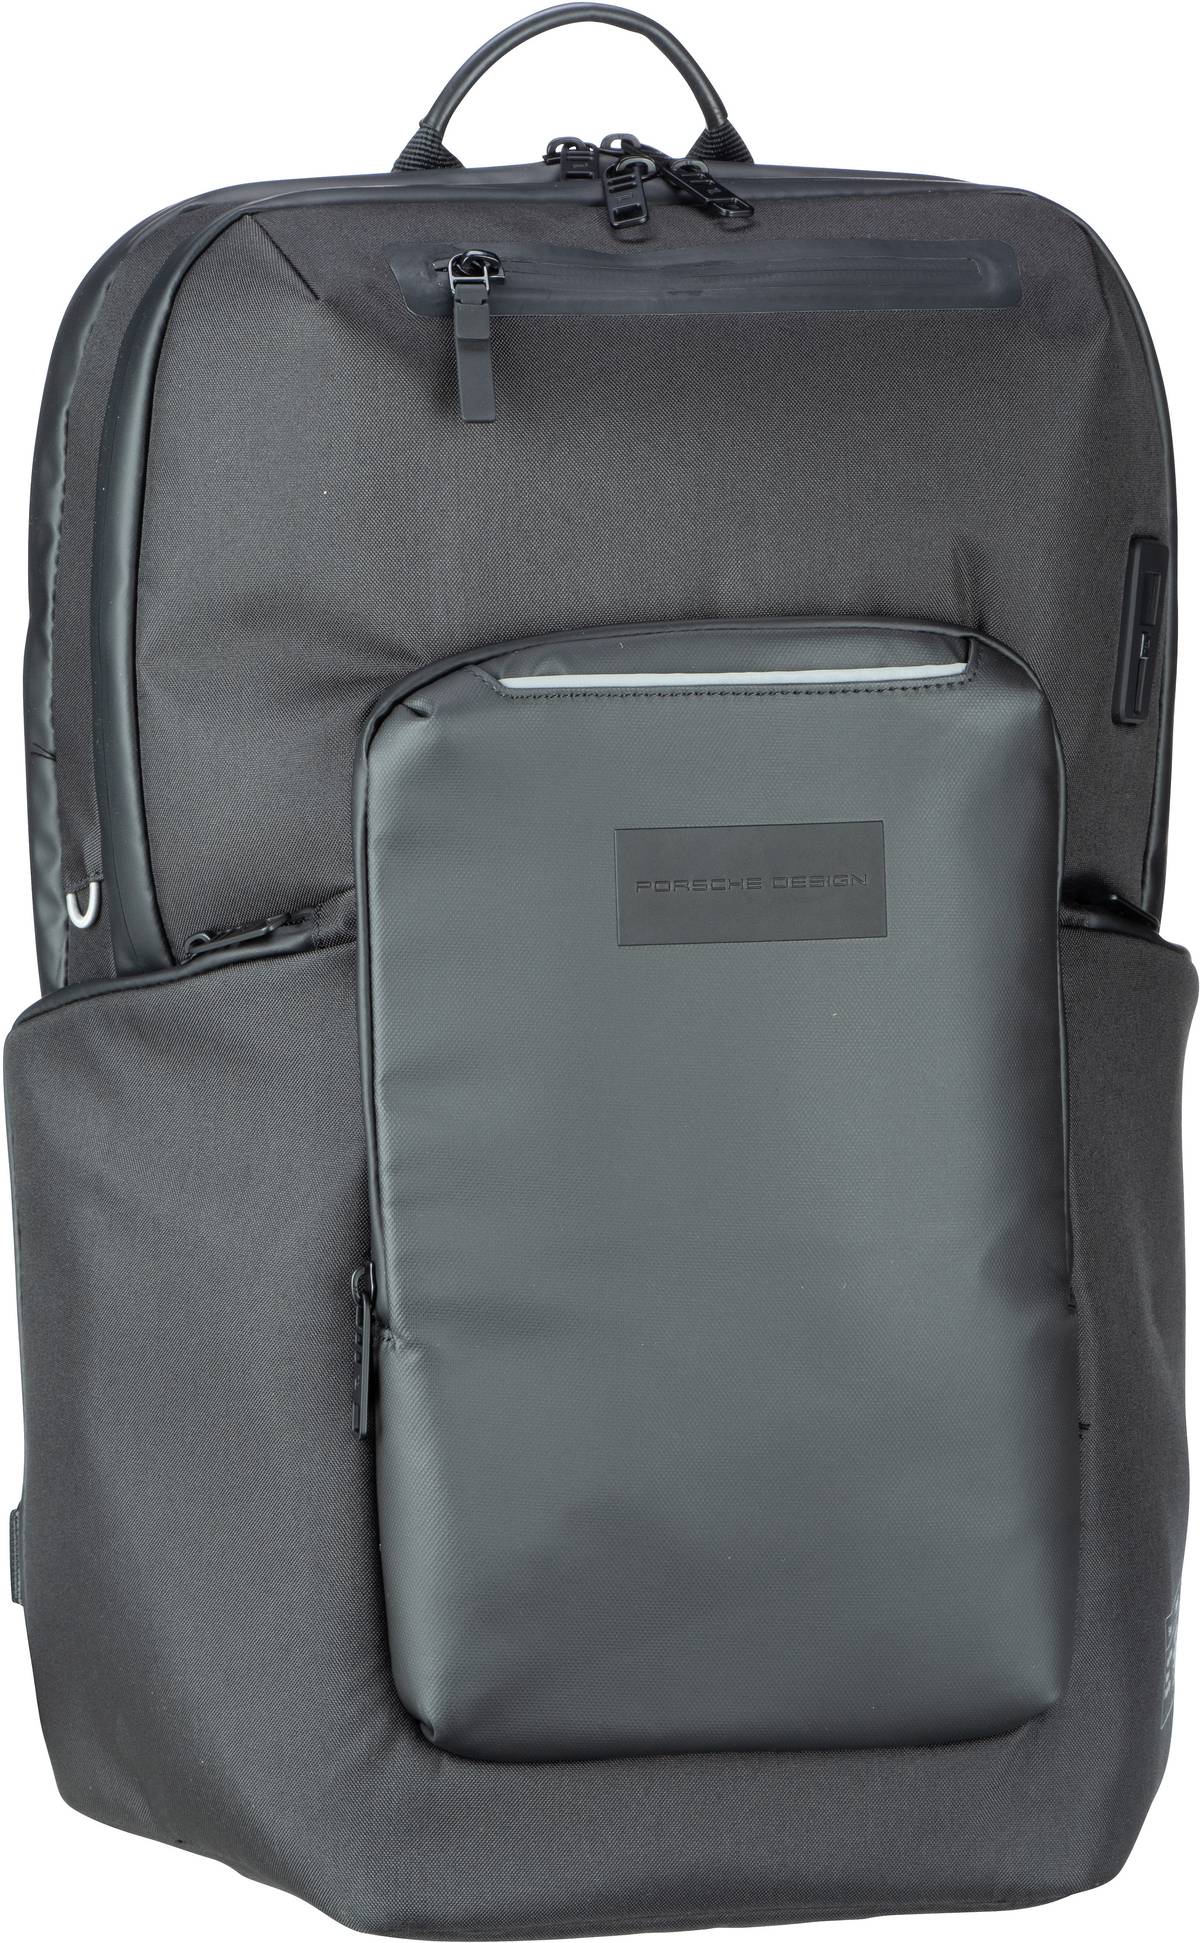 Porsche Design Urban Eco Backpack M2 - Black